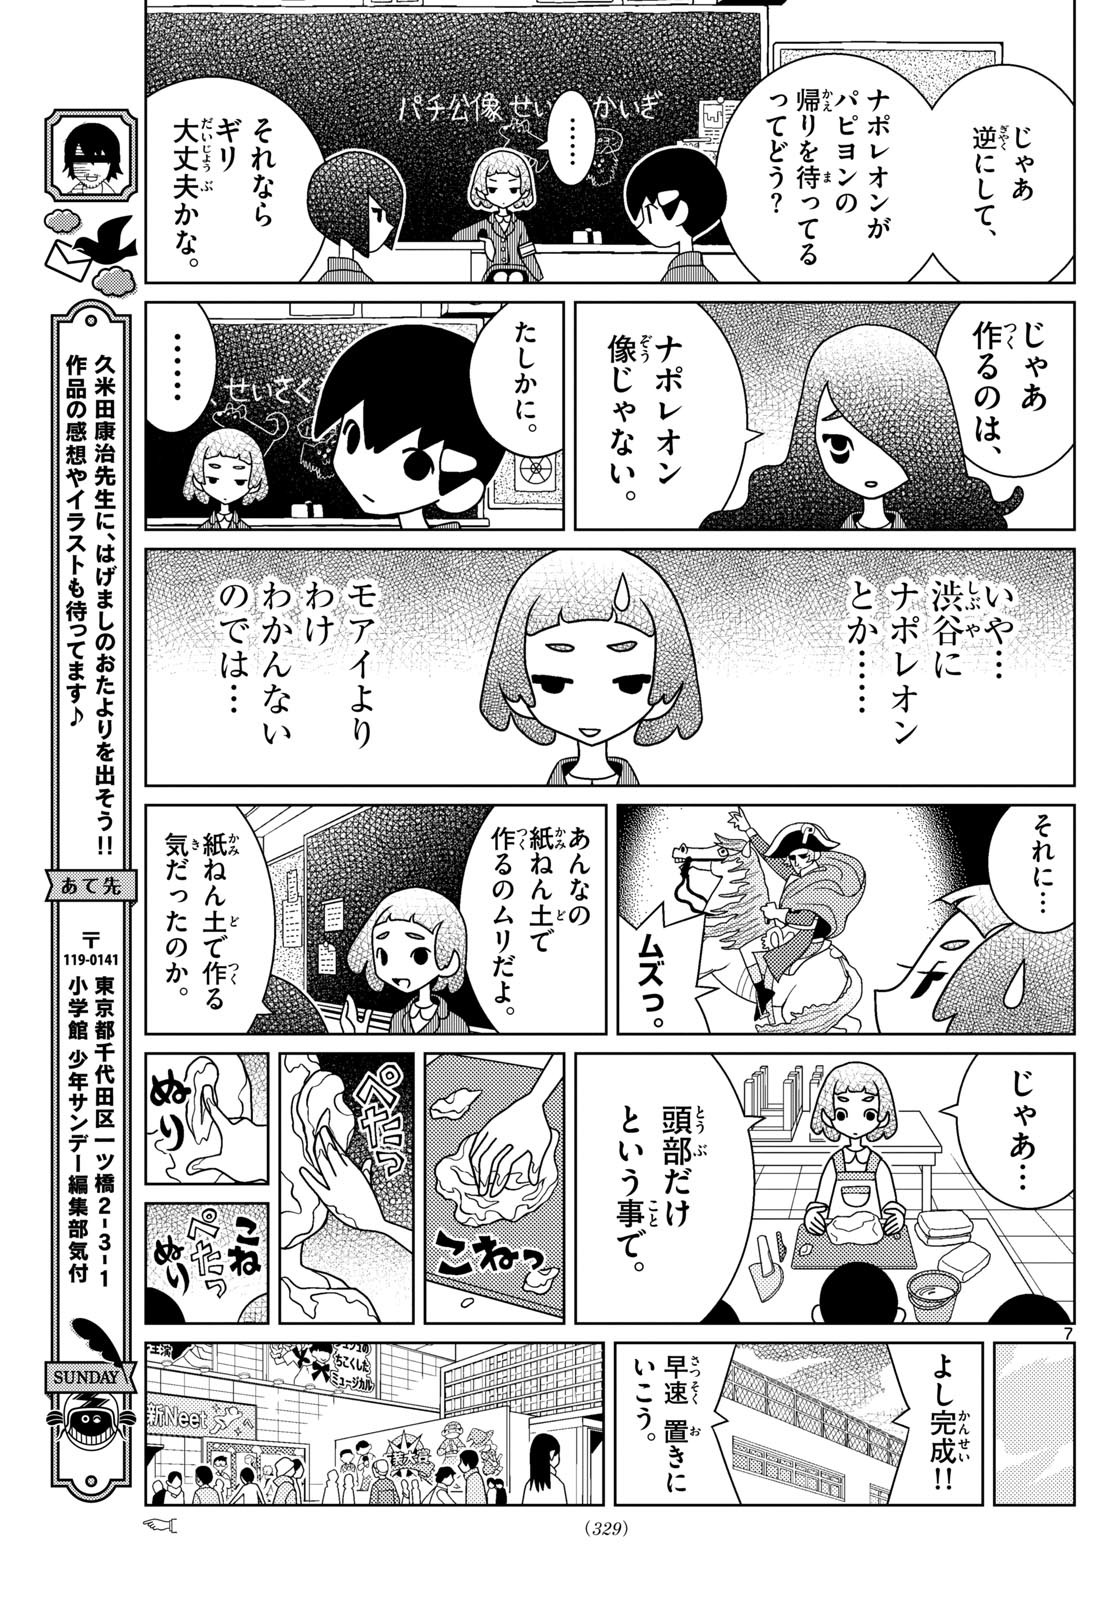 Shibuya Near Family - Chapter 087 - Page 7